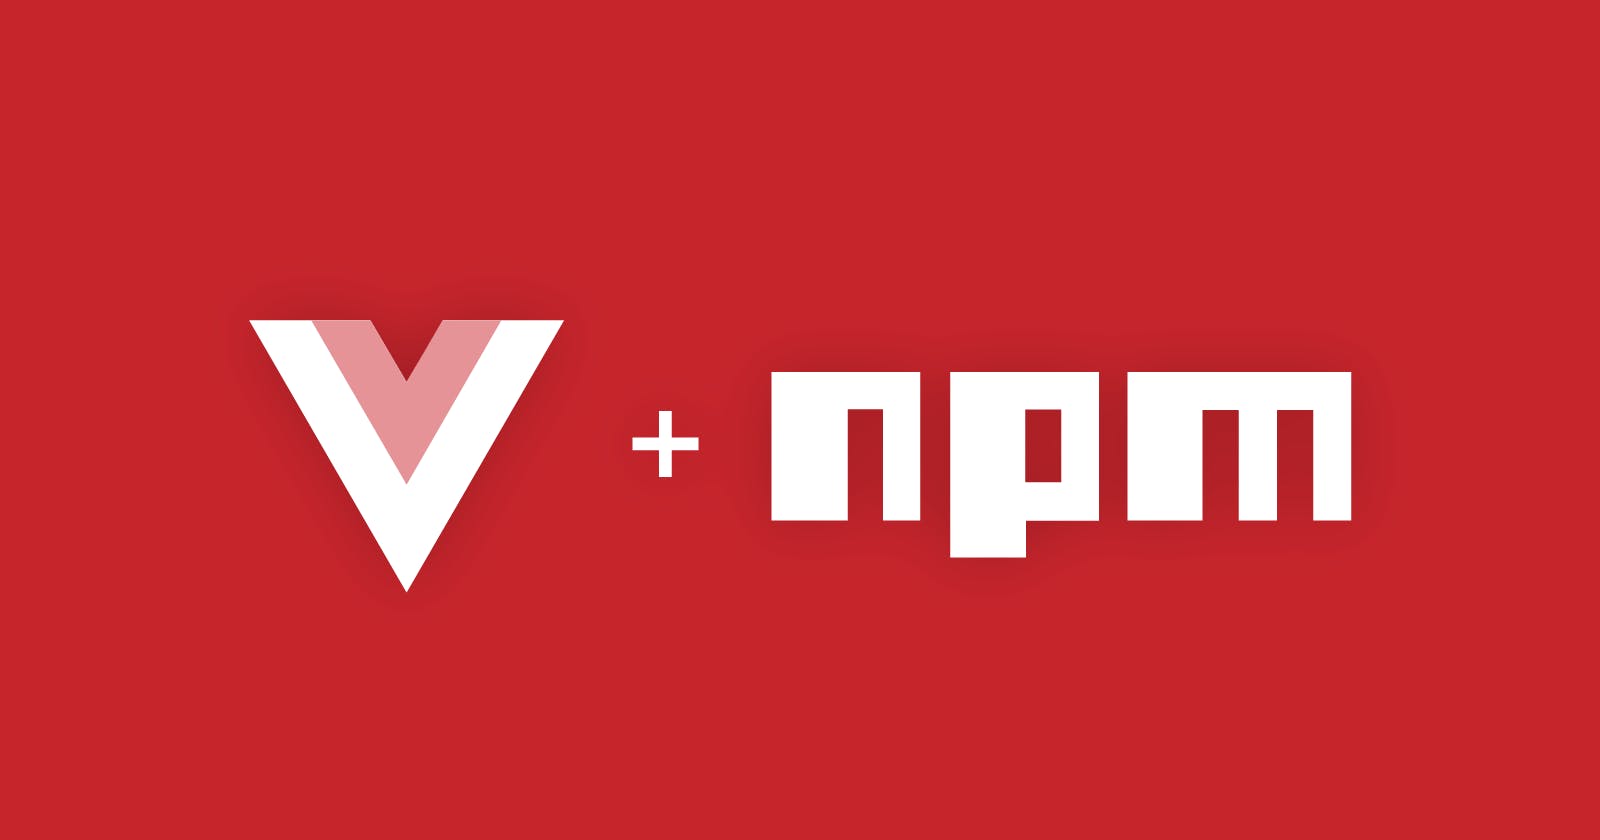 Publishing vue components to npm